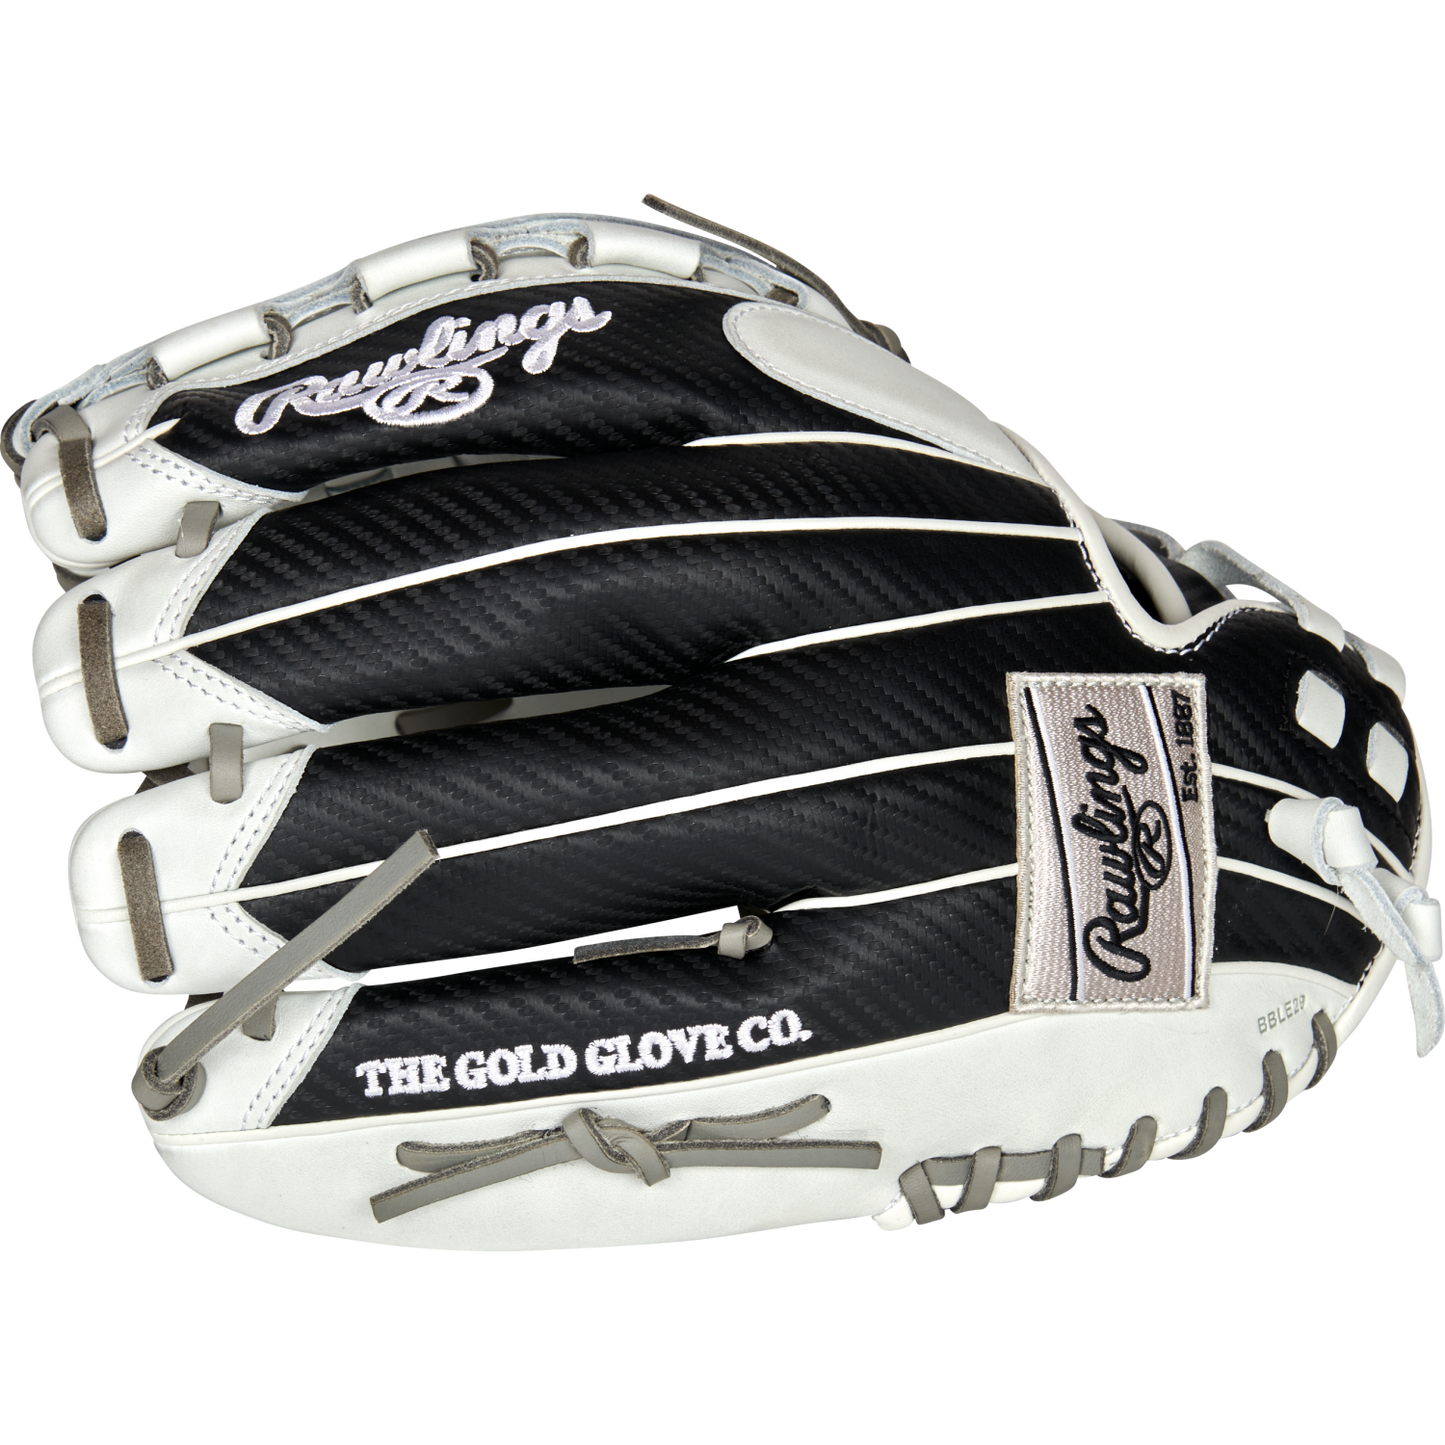 Rawlings-Softball Gloves-Guardian Baseball